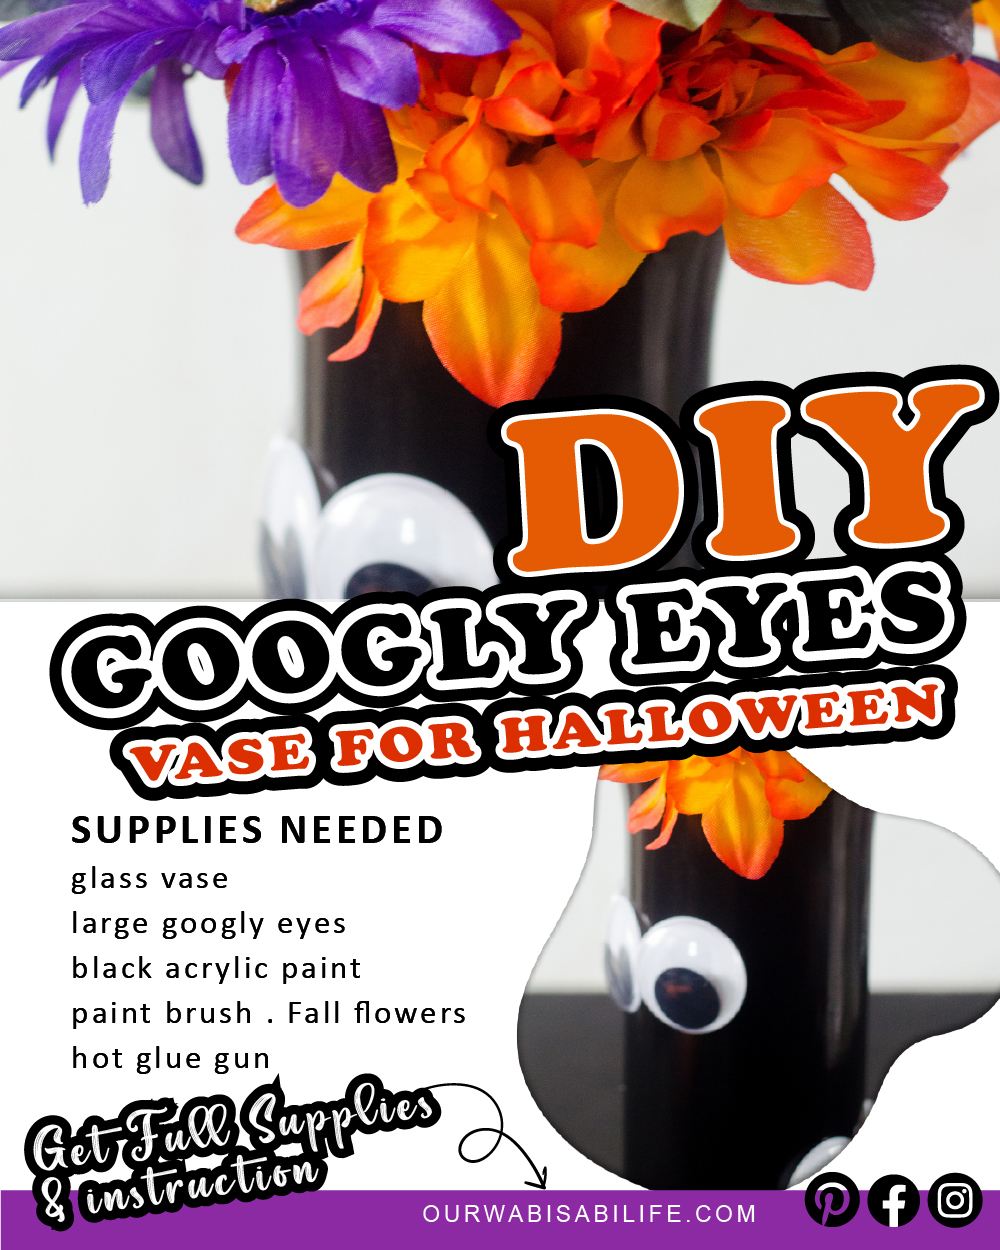 Craftaholics Anonymous®  Halloween Googly Eye Door #MakeAmazing